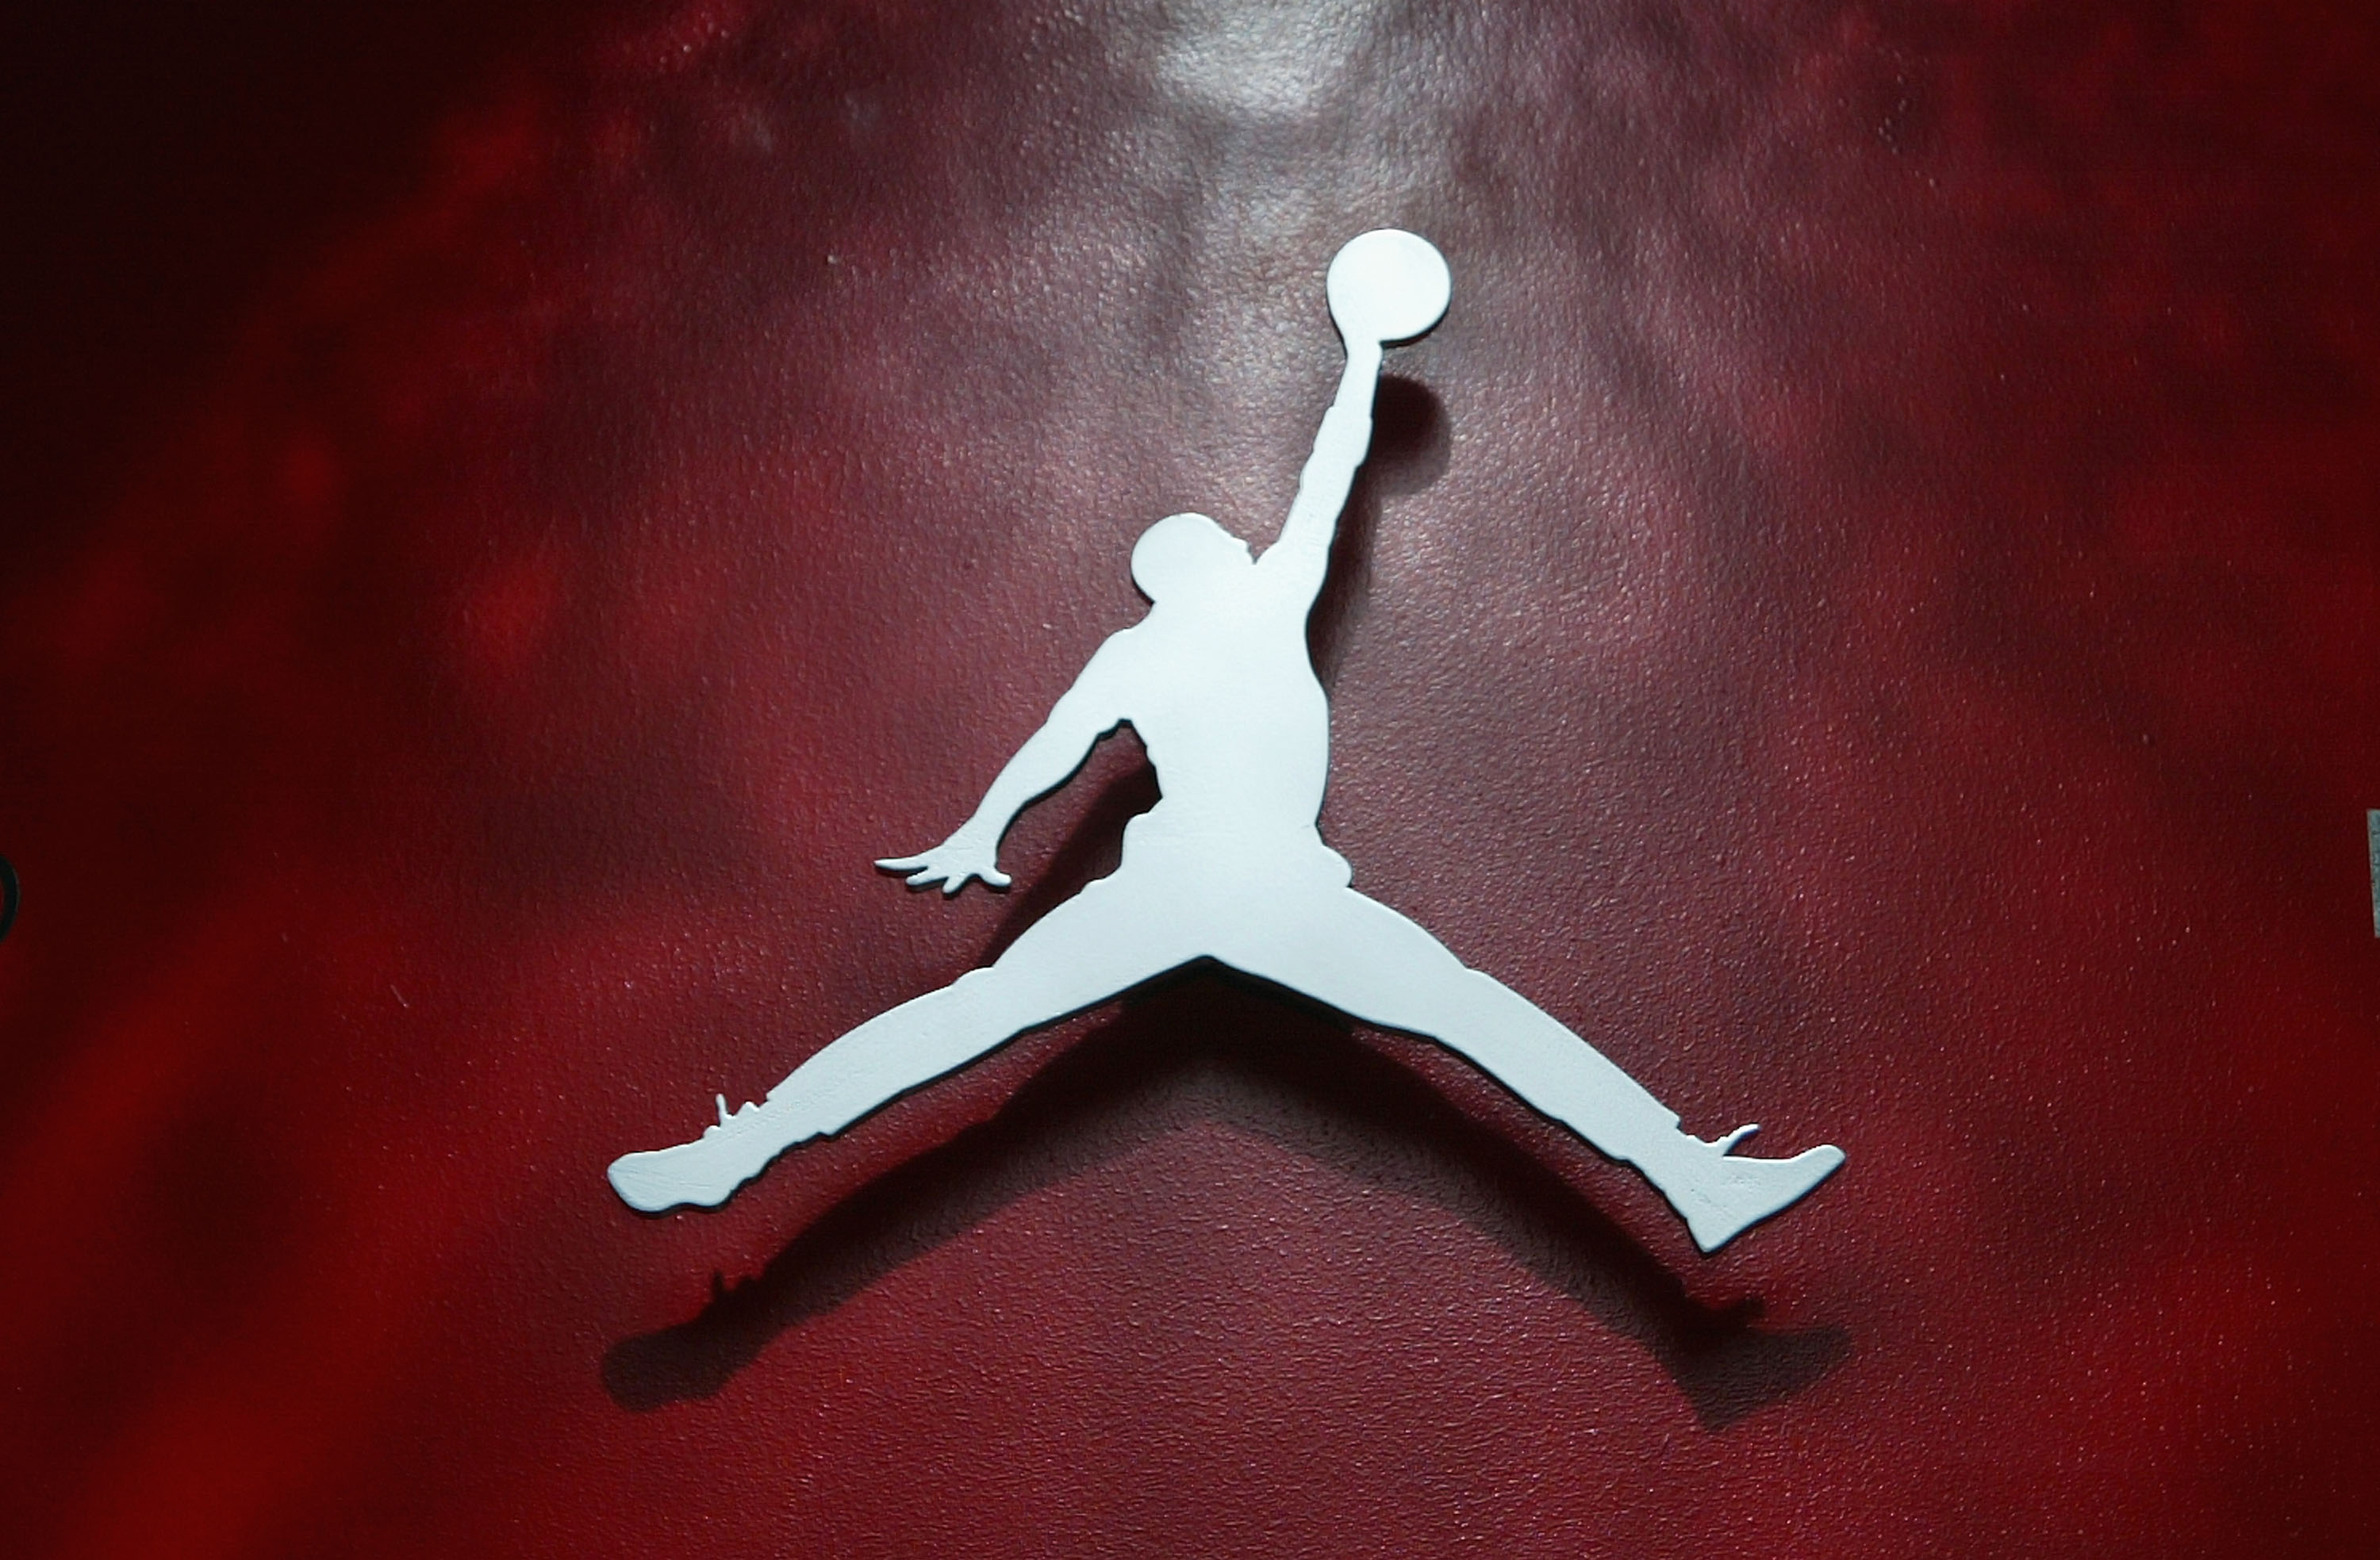 Air Jordan 13 “Playoffs” Rumored Release Date Revealed